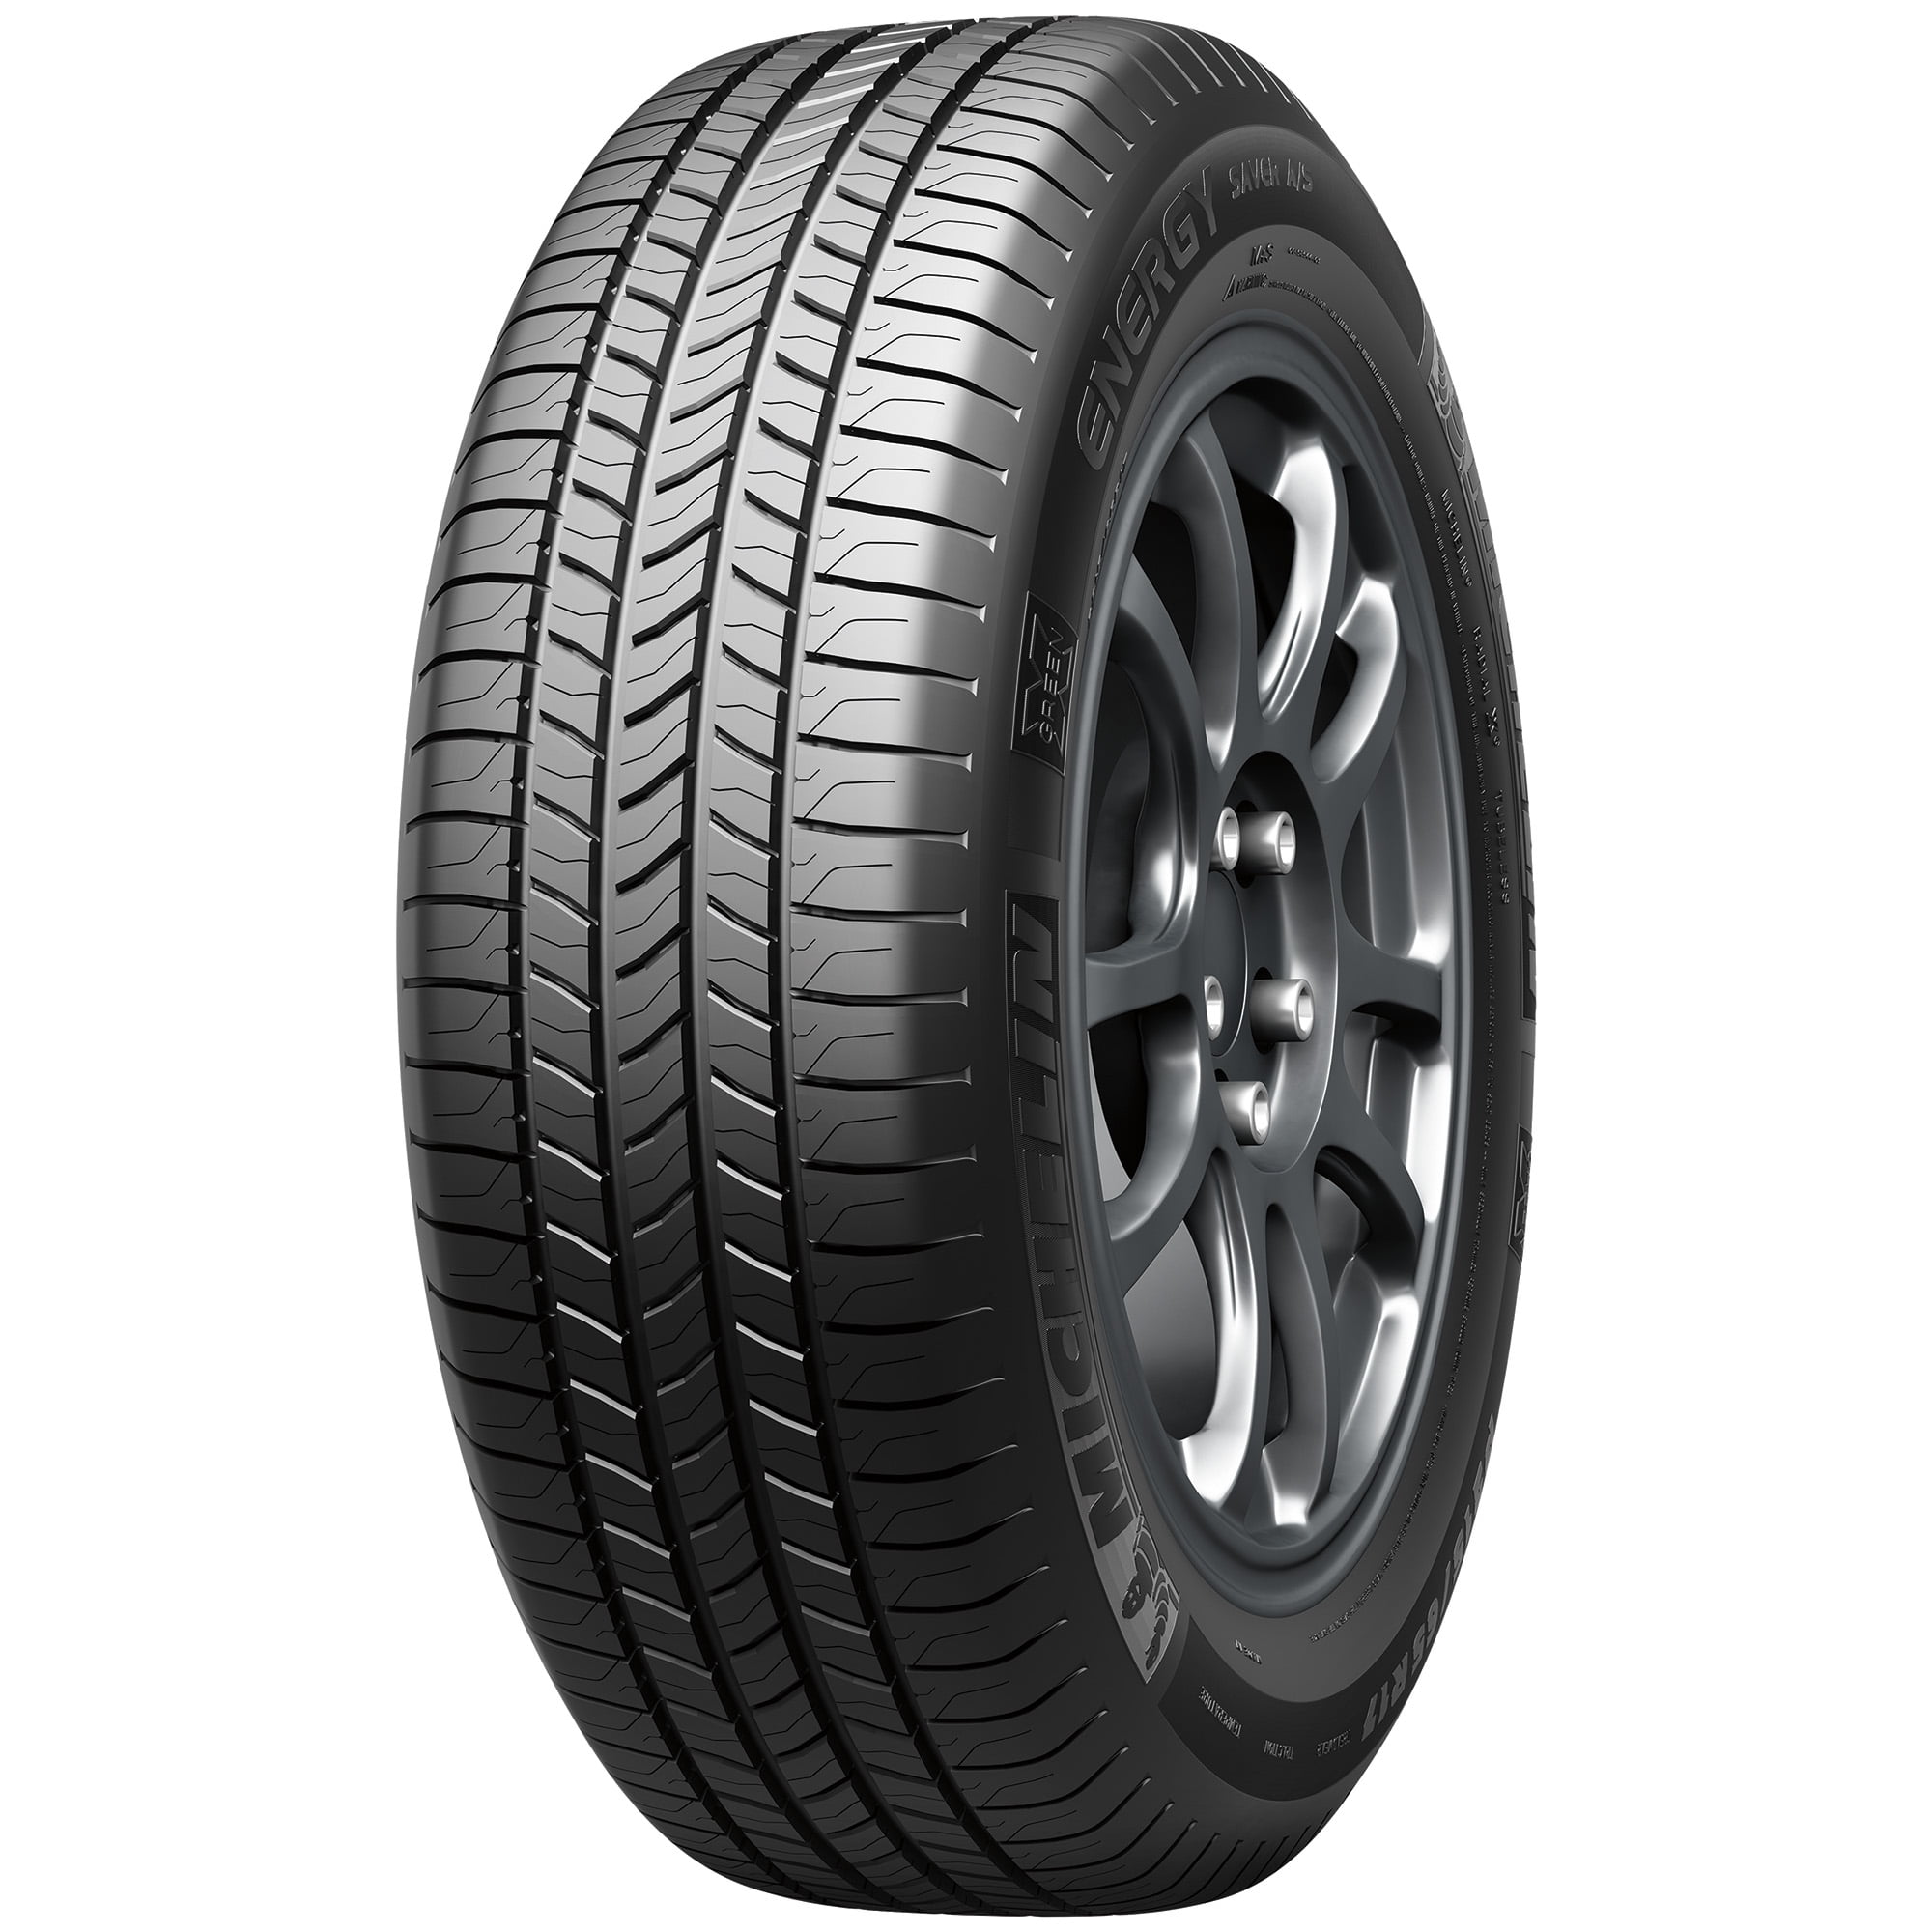 All-Season Michelin 215/50R17 Energy Tire A/S Saver 91H